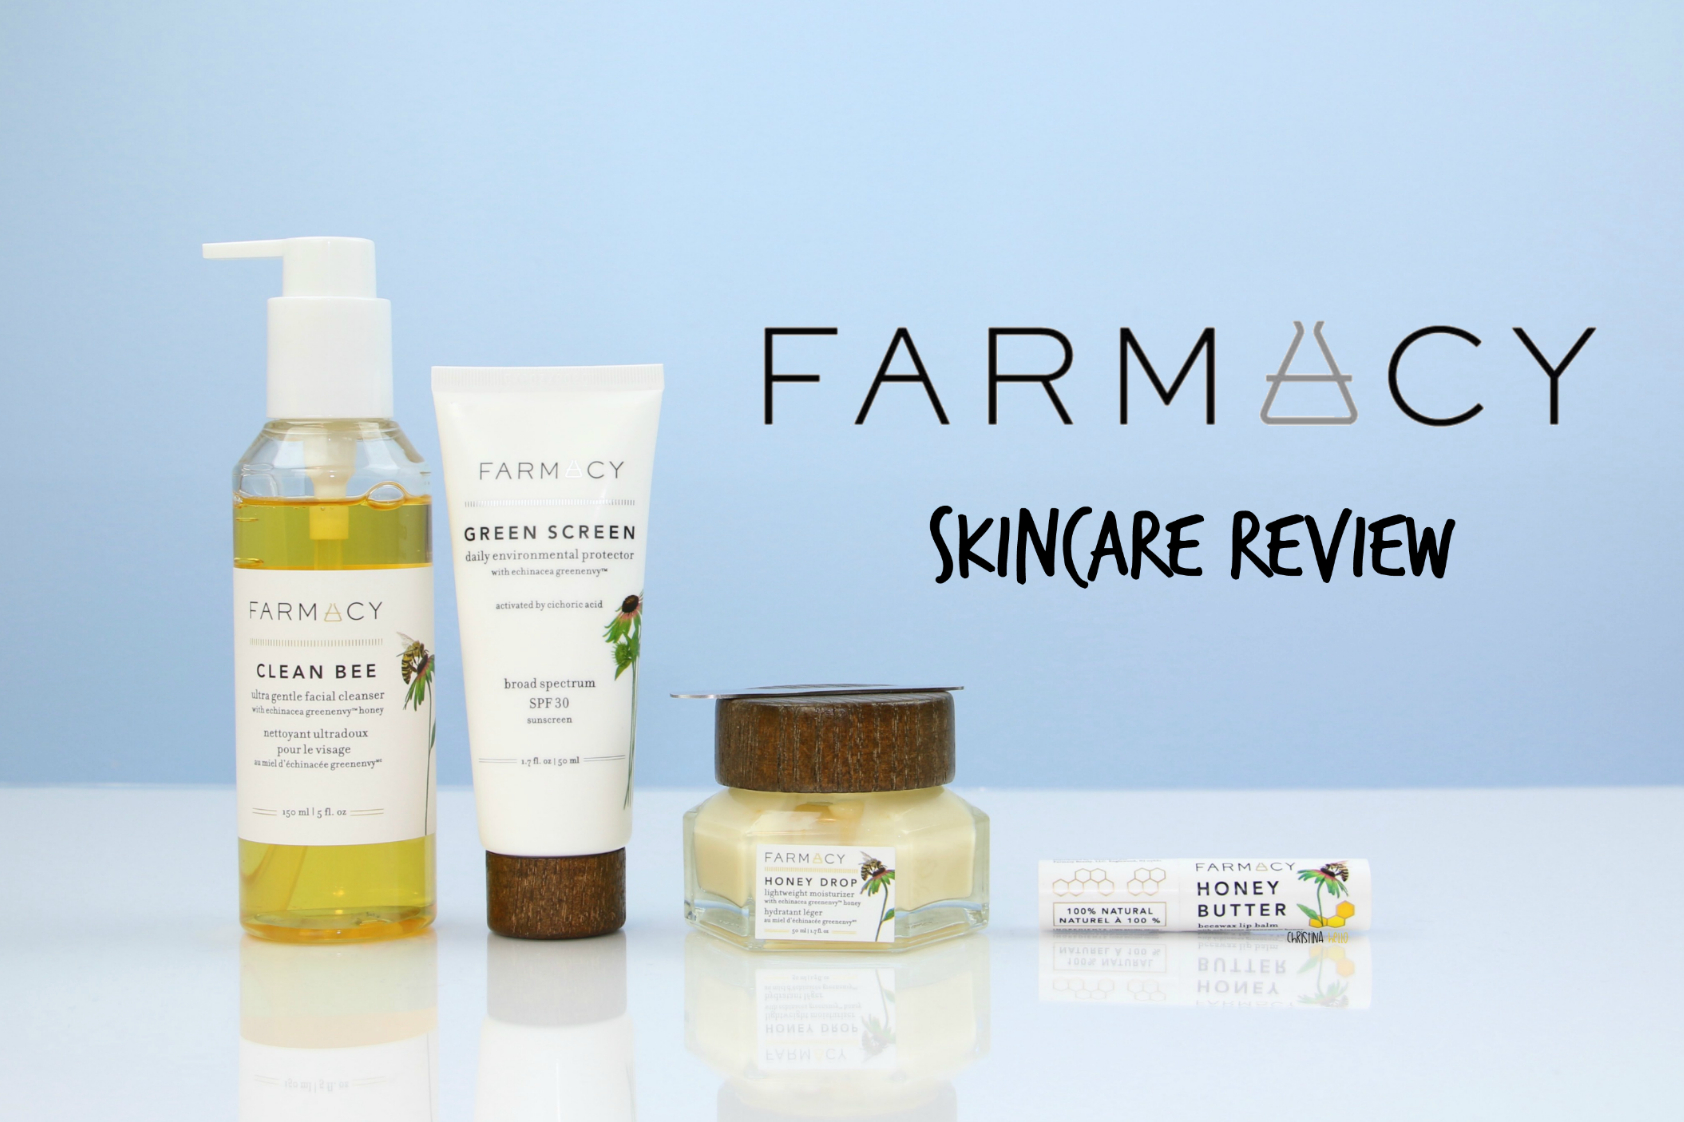 Farmacy skincare review.